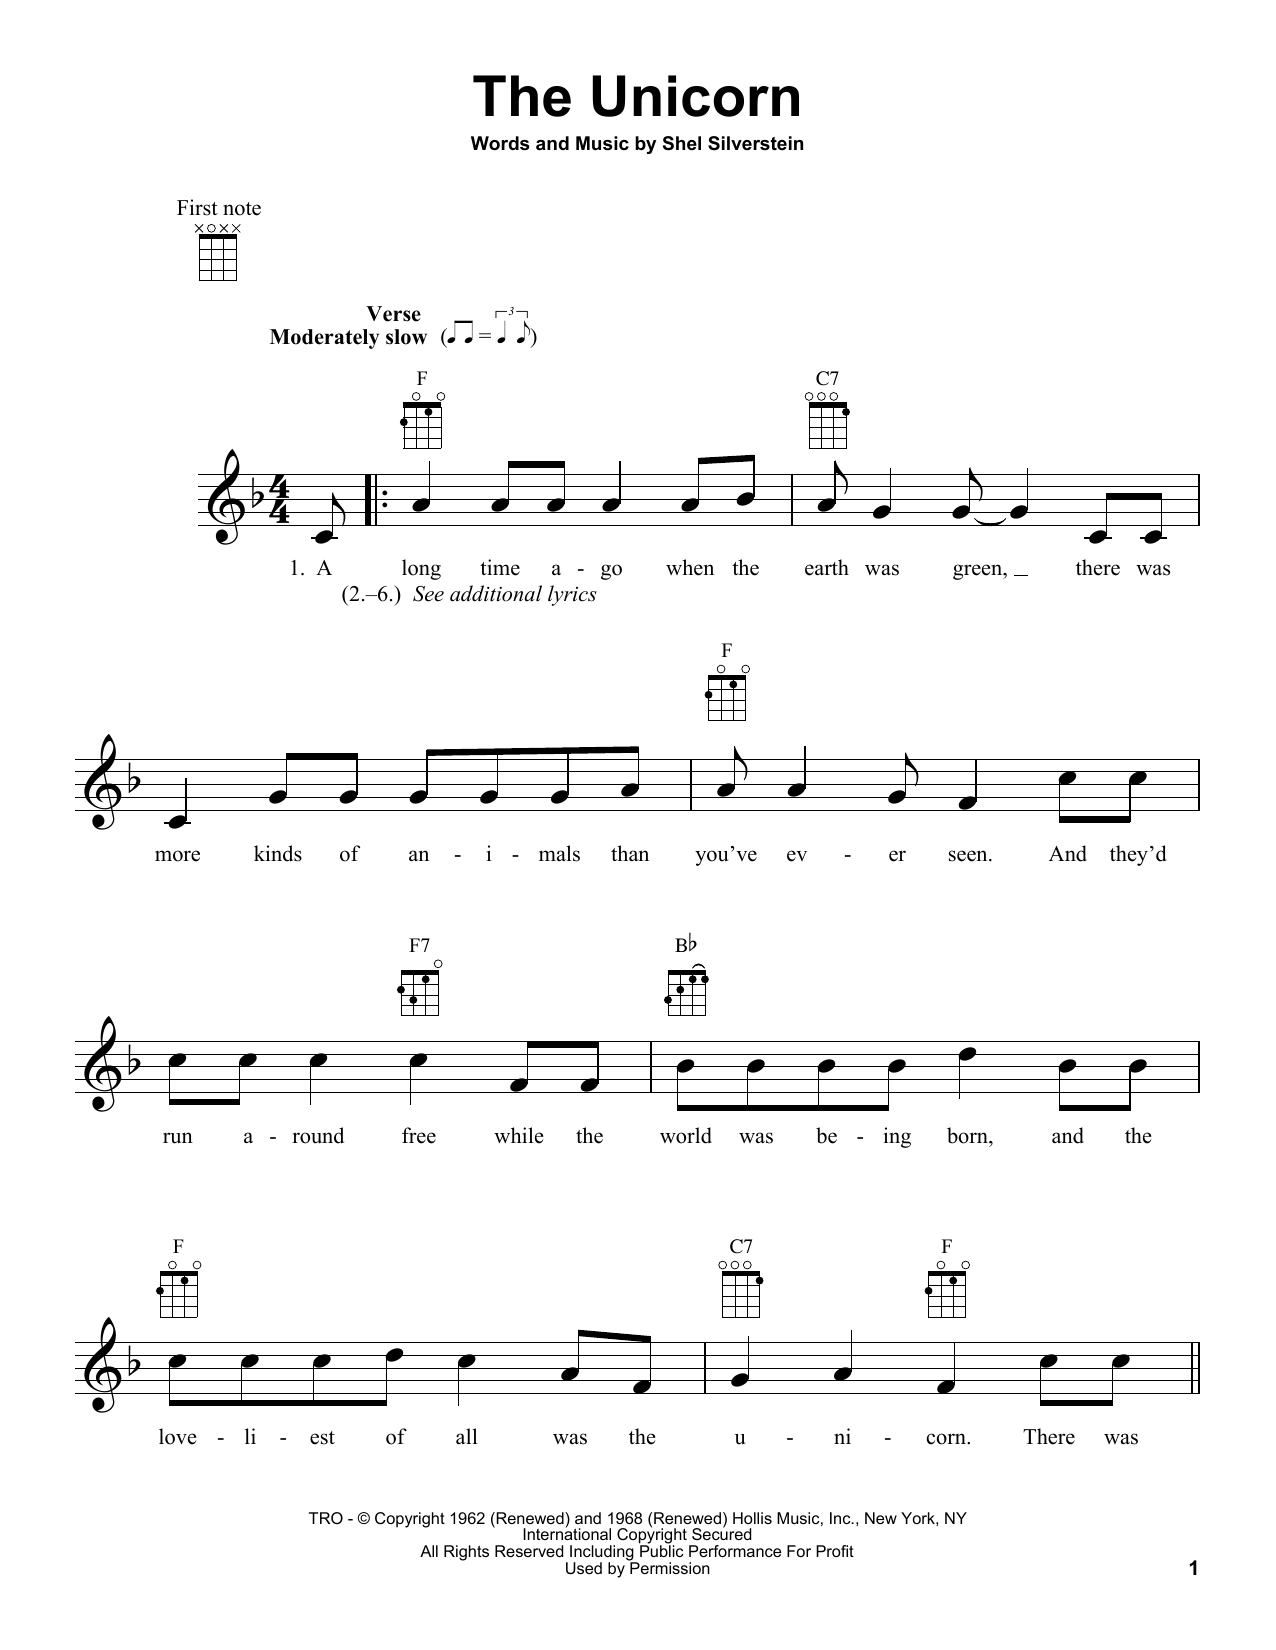 Irish Rovers The Unicorn sheet music notes and chords arranged for Guitar Chords/Lyrics